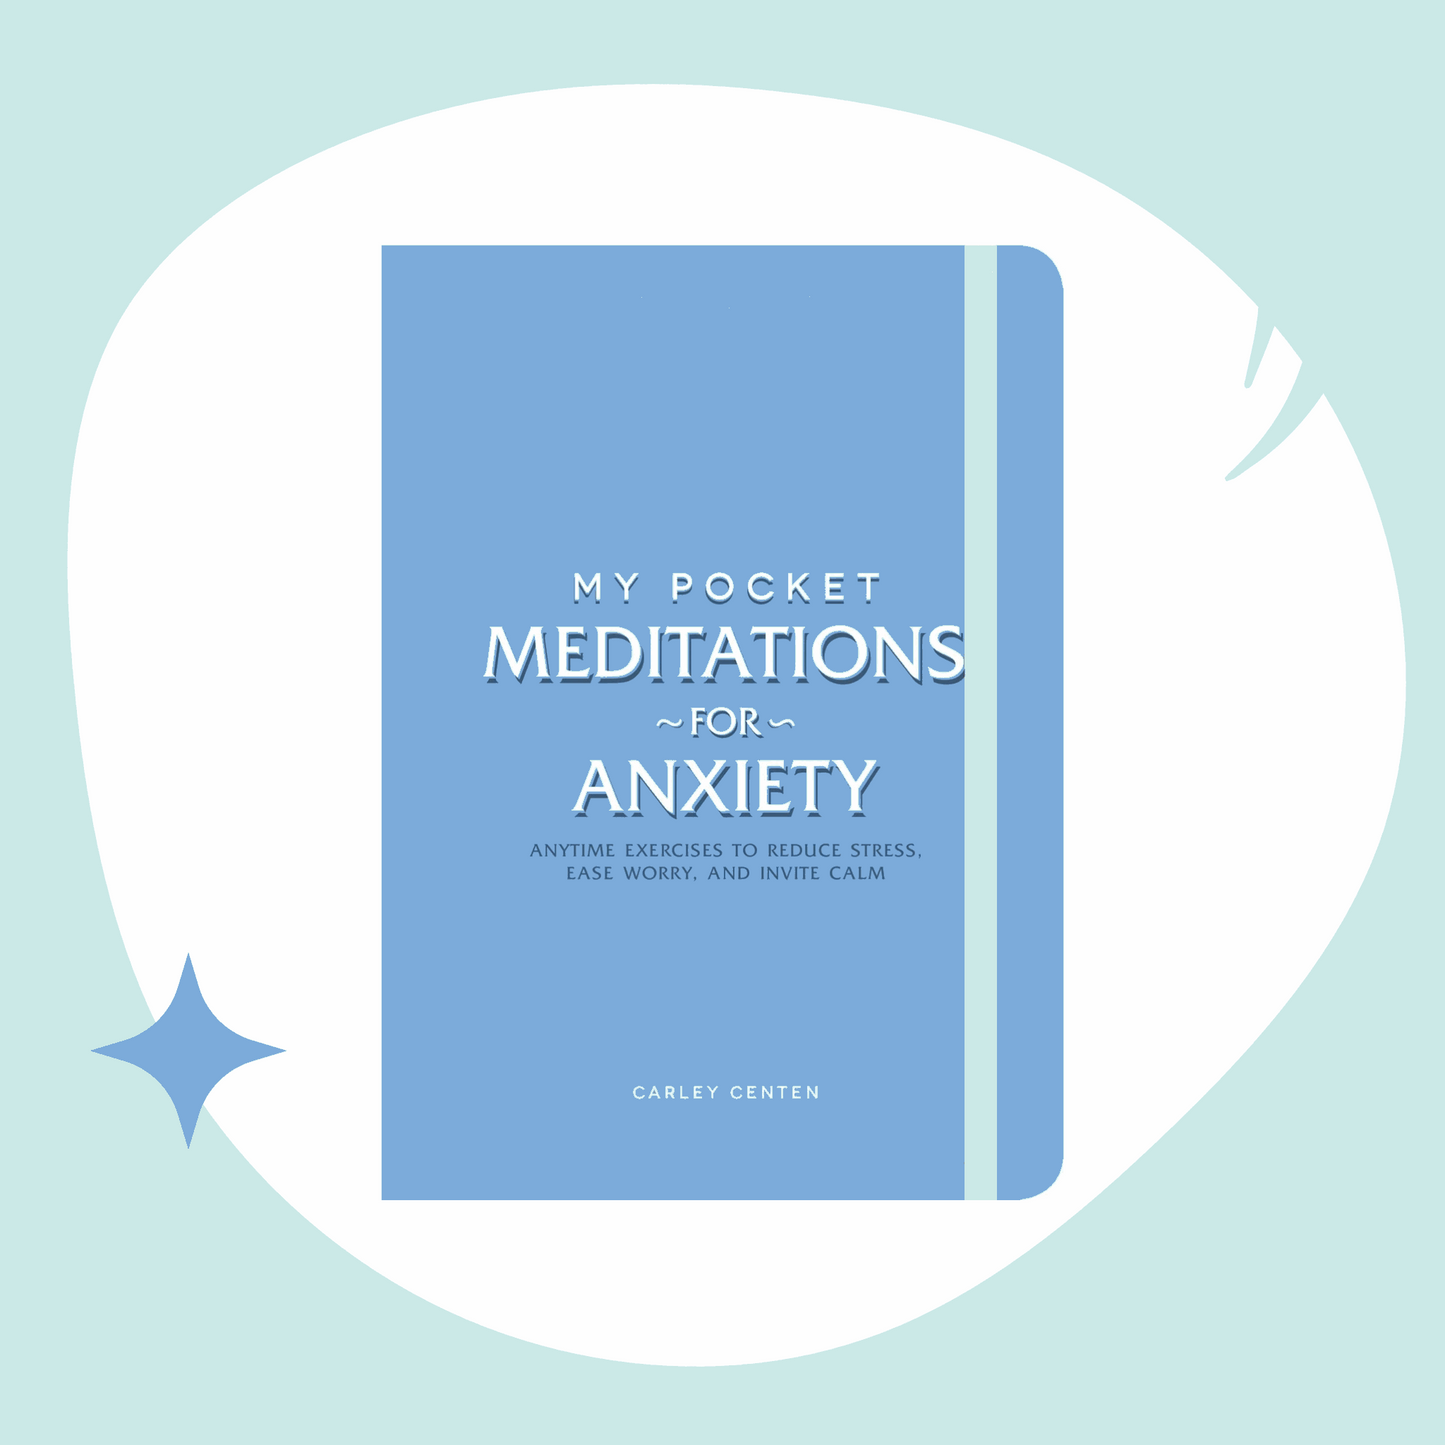 My Pocket Meditations For Anxiety